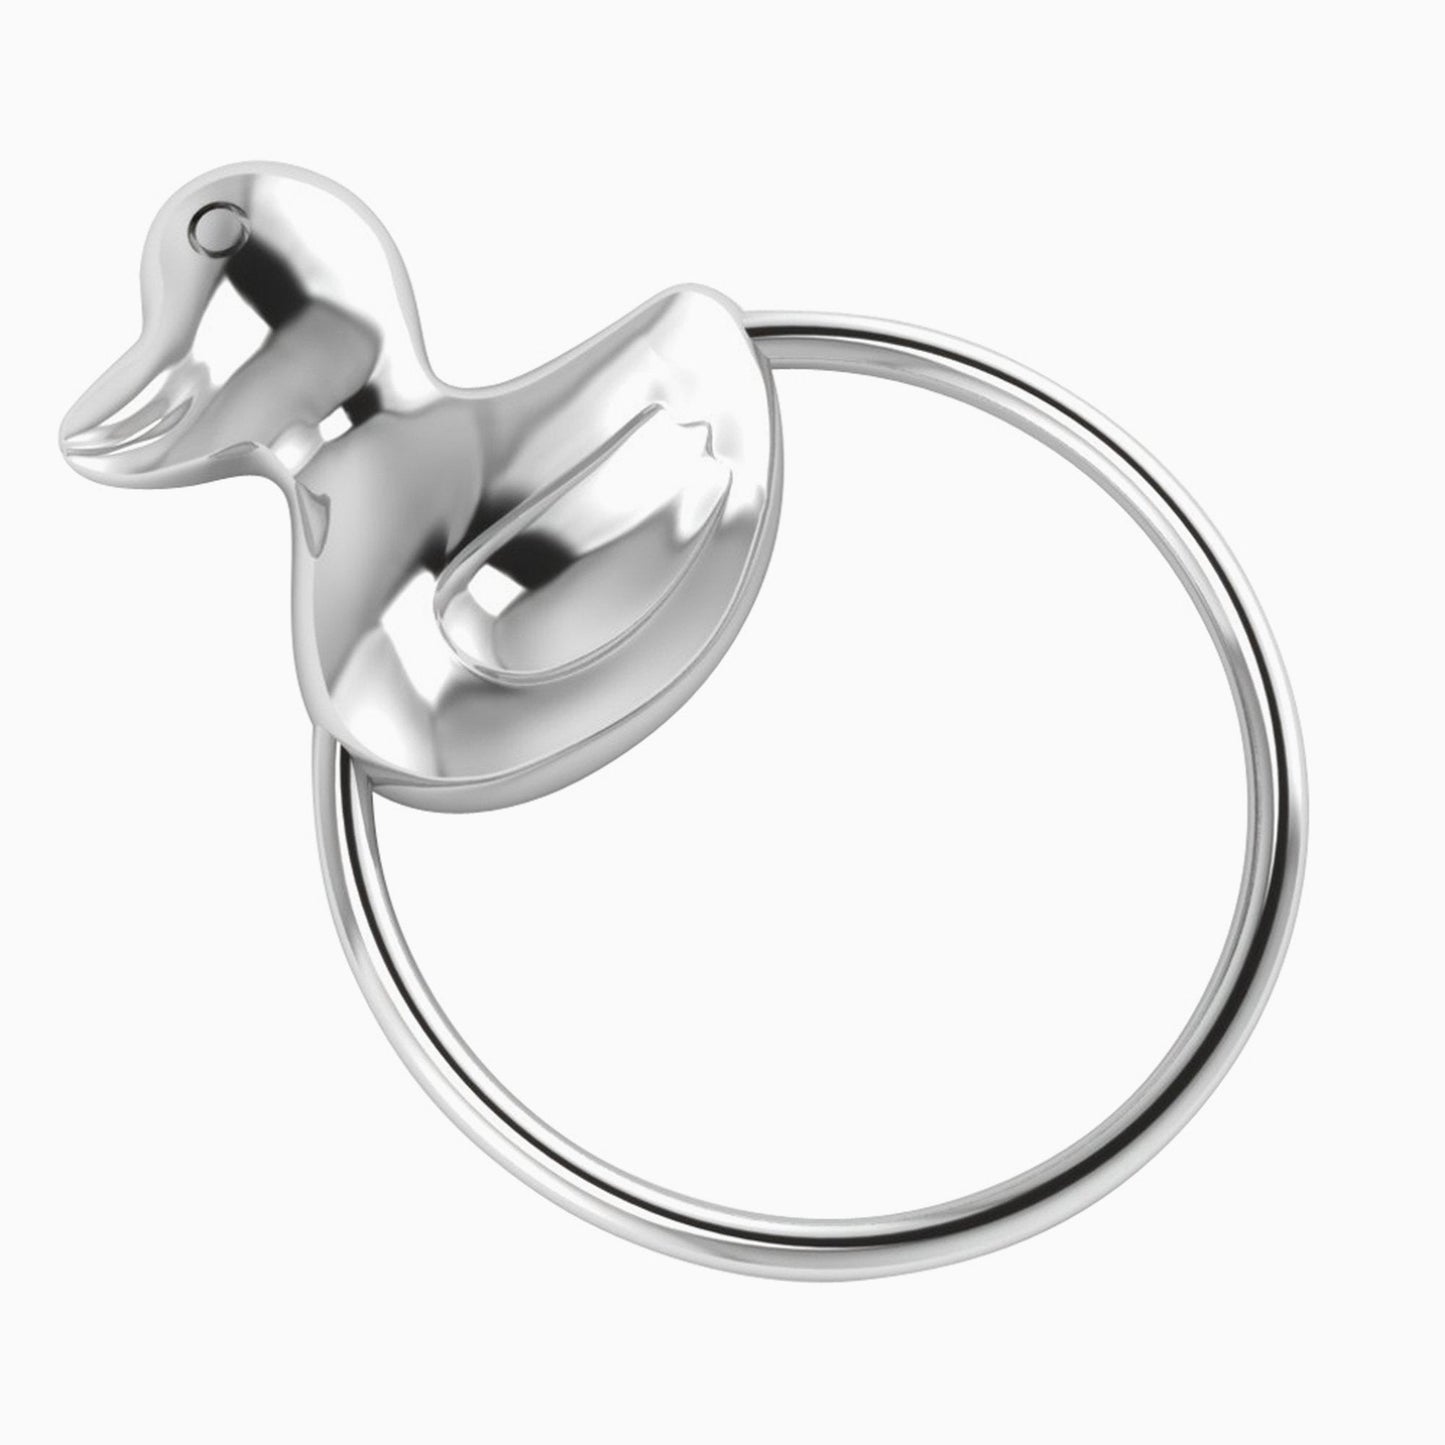 Duck Ring Sterling Silver Baby Rattle by Krysaliis